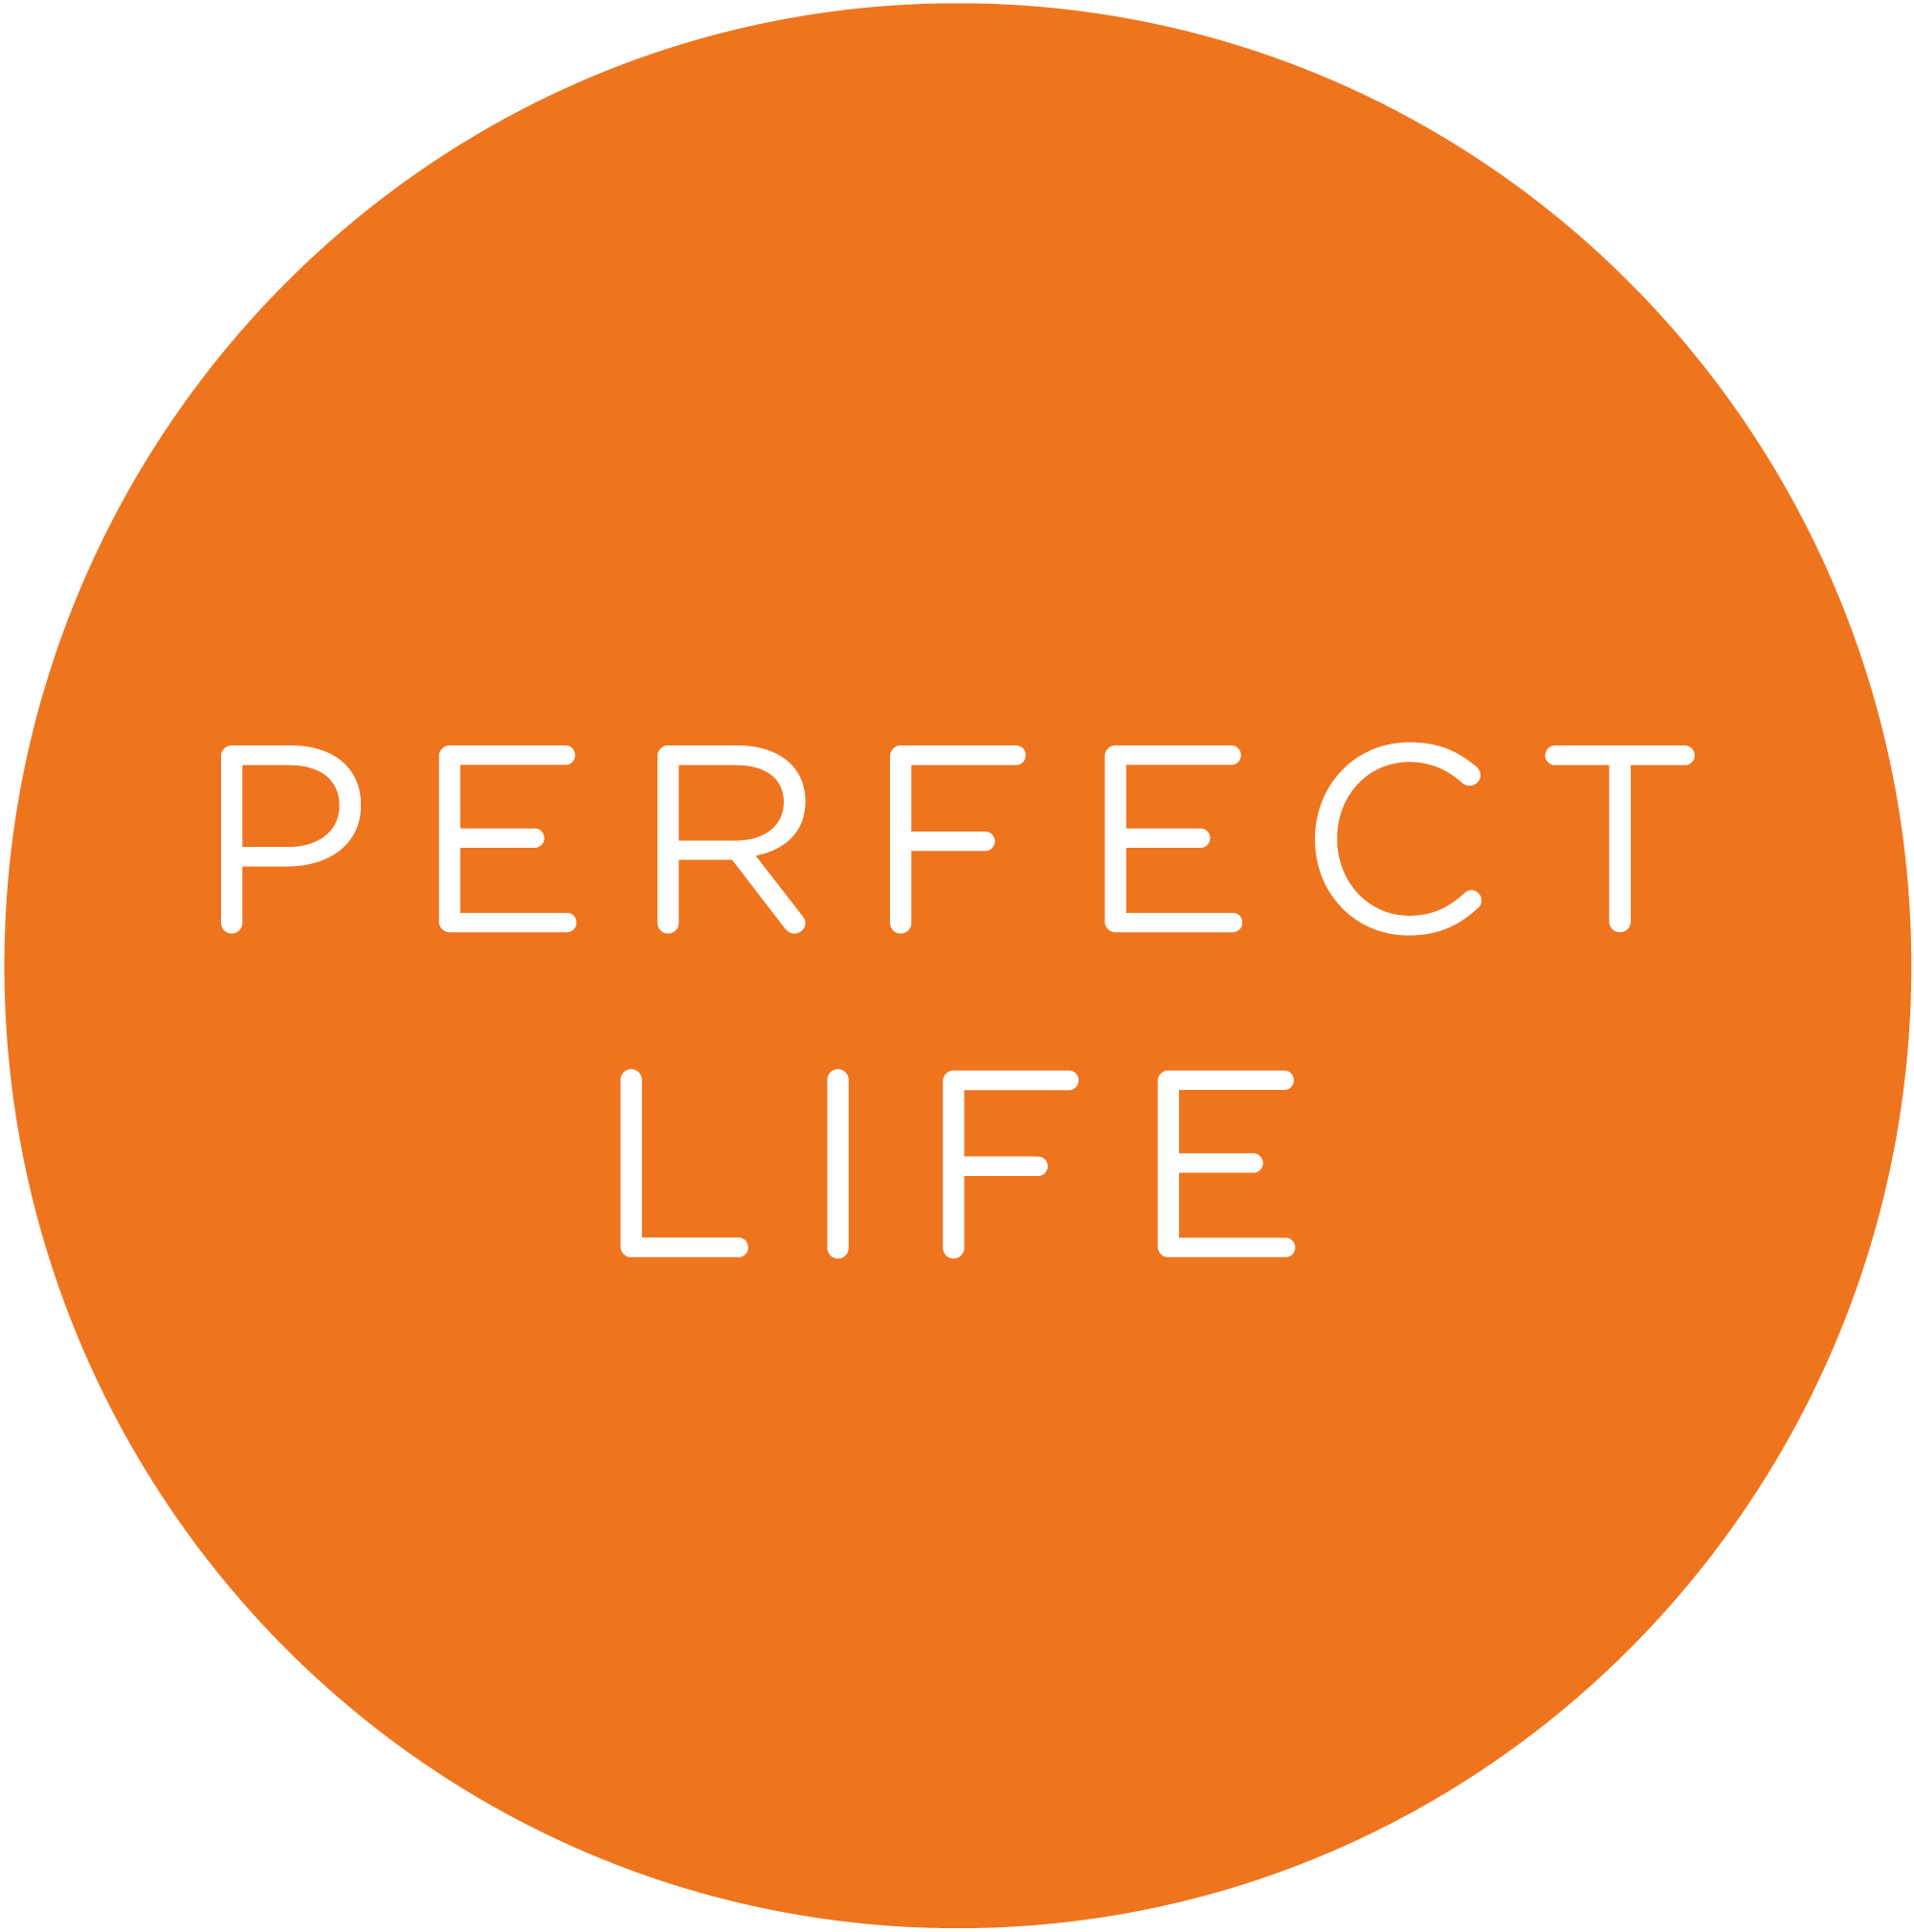 Perfect life 3. Perfect Life. Perfect Life канал. Perfect Life видео. Перфект лайф песни.